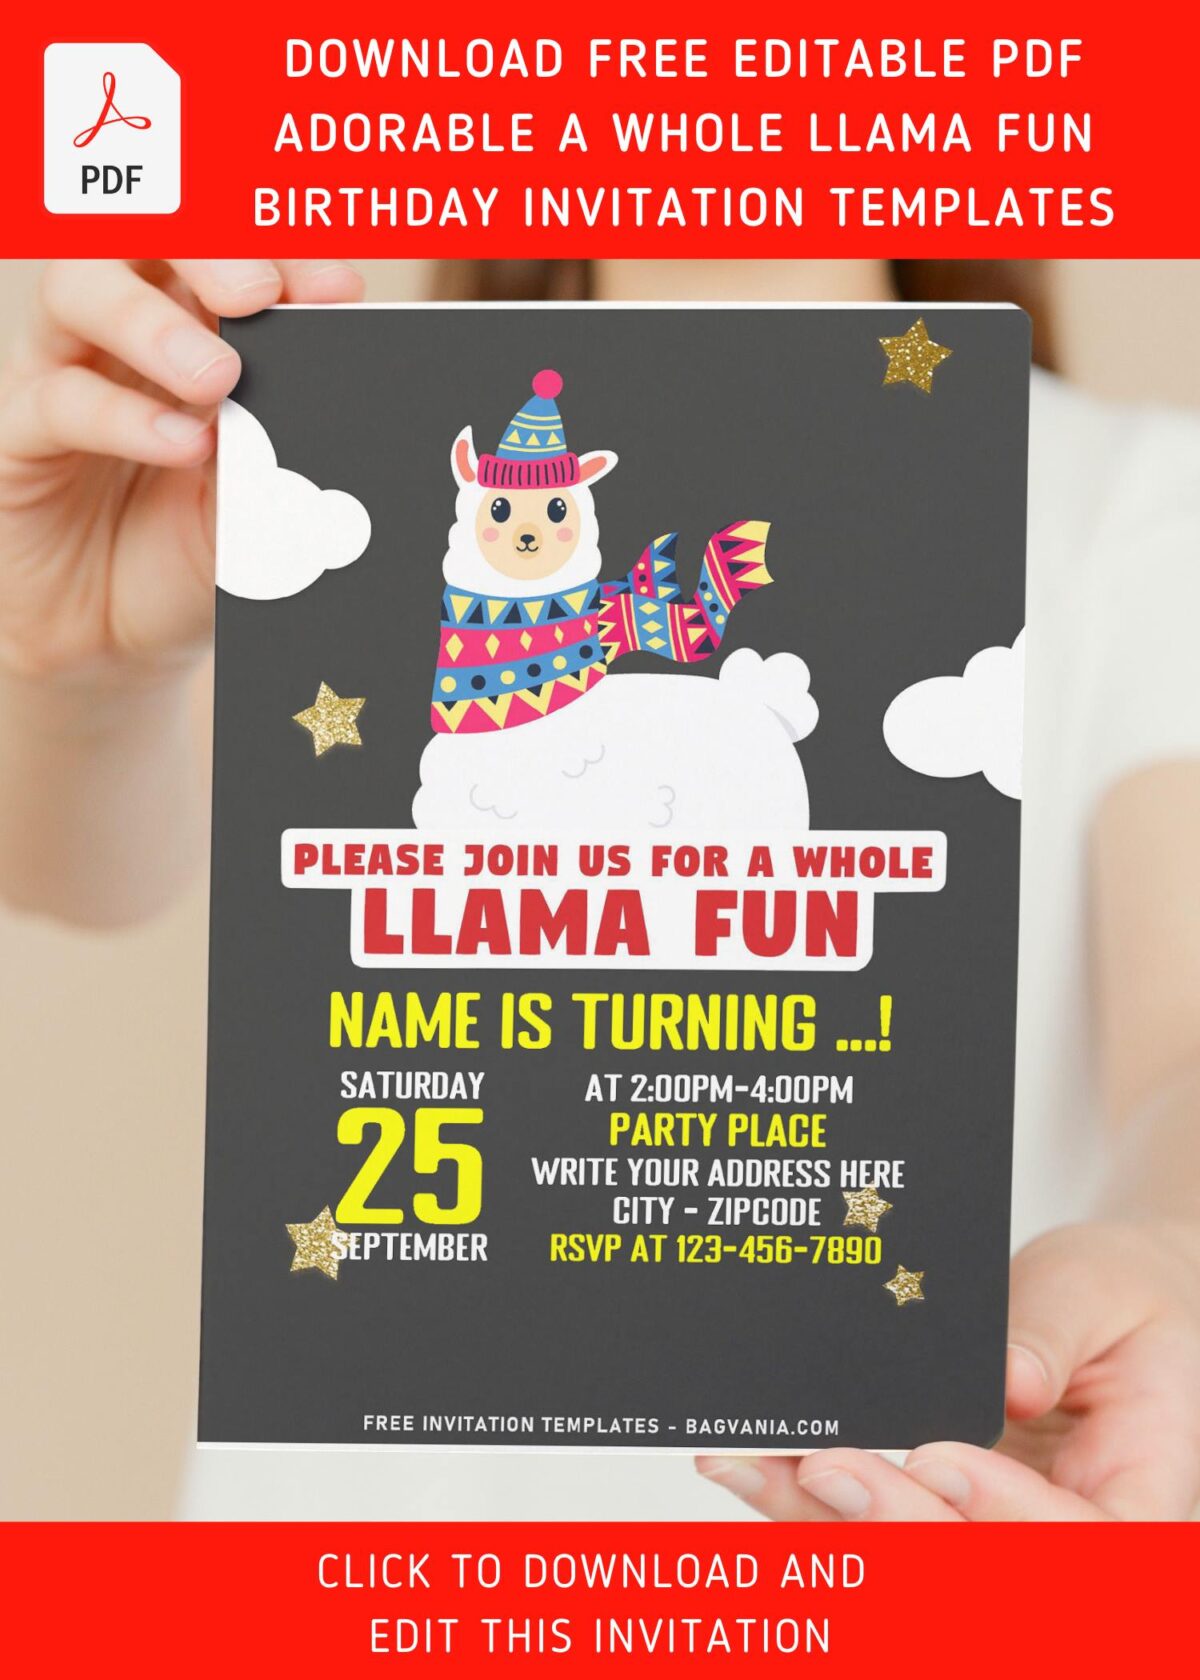 (Free Editable PDF) Super Cute Llama Party-Rama Birthday Invitation Templates with white fluffy clouds